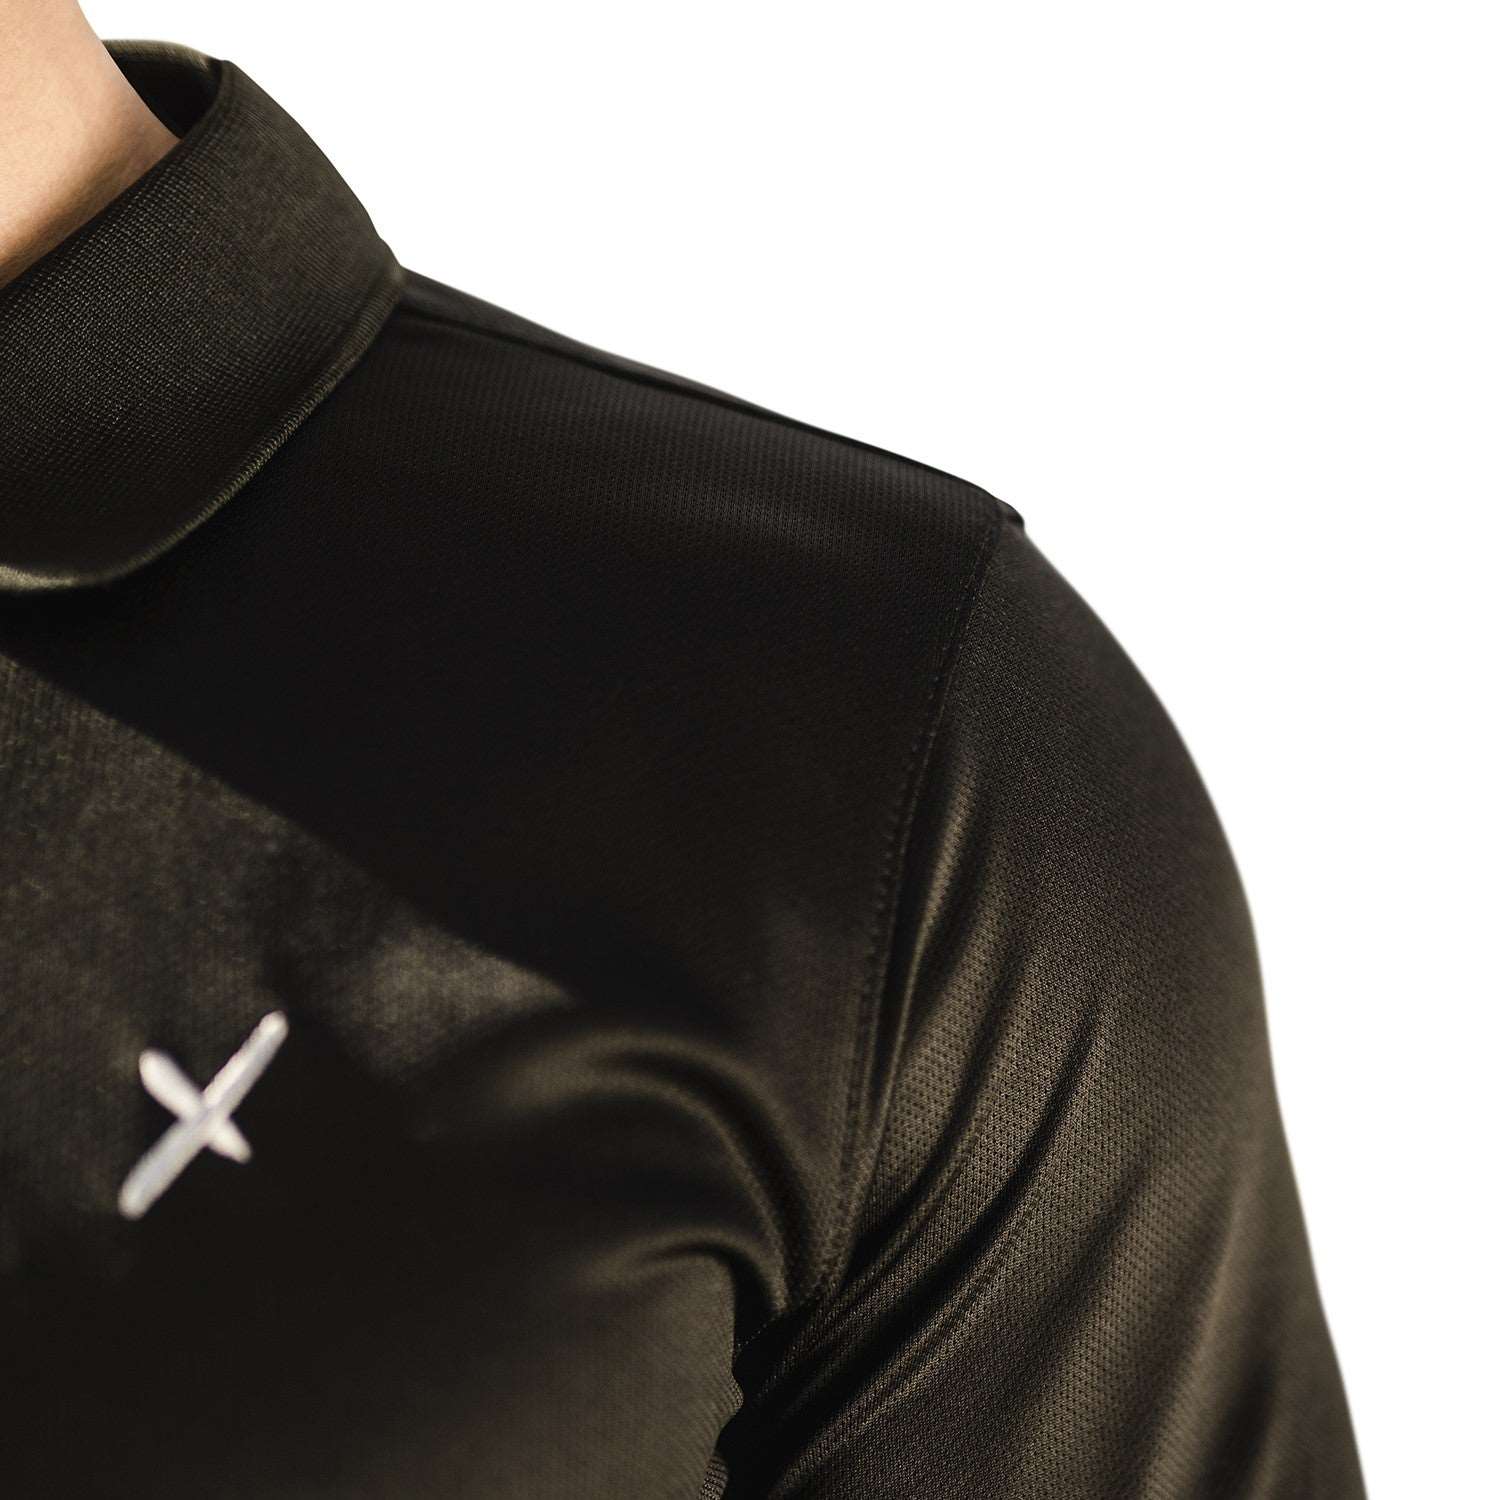 Cflex Activewear half sleeve Polo shirt-MPLO-2001-Black - FactoryX.pk